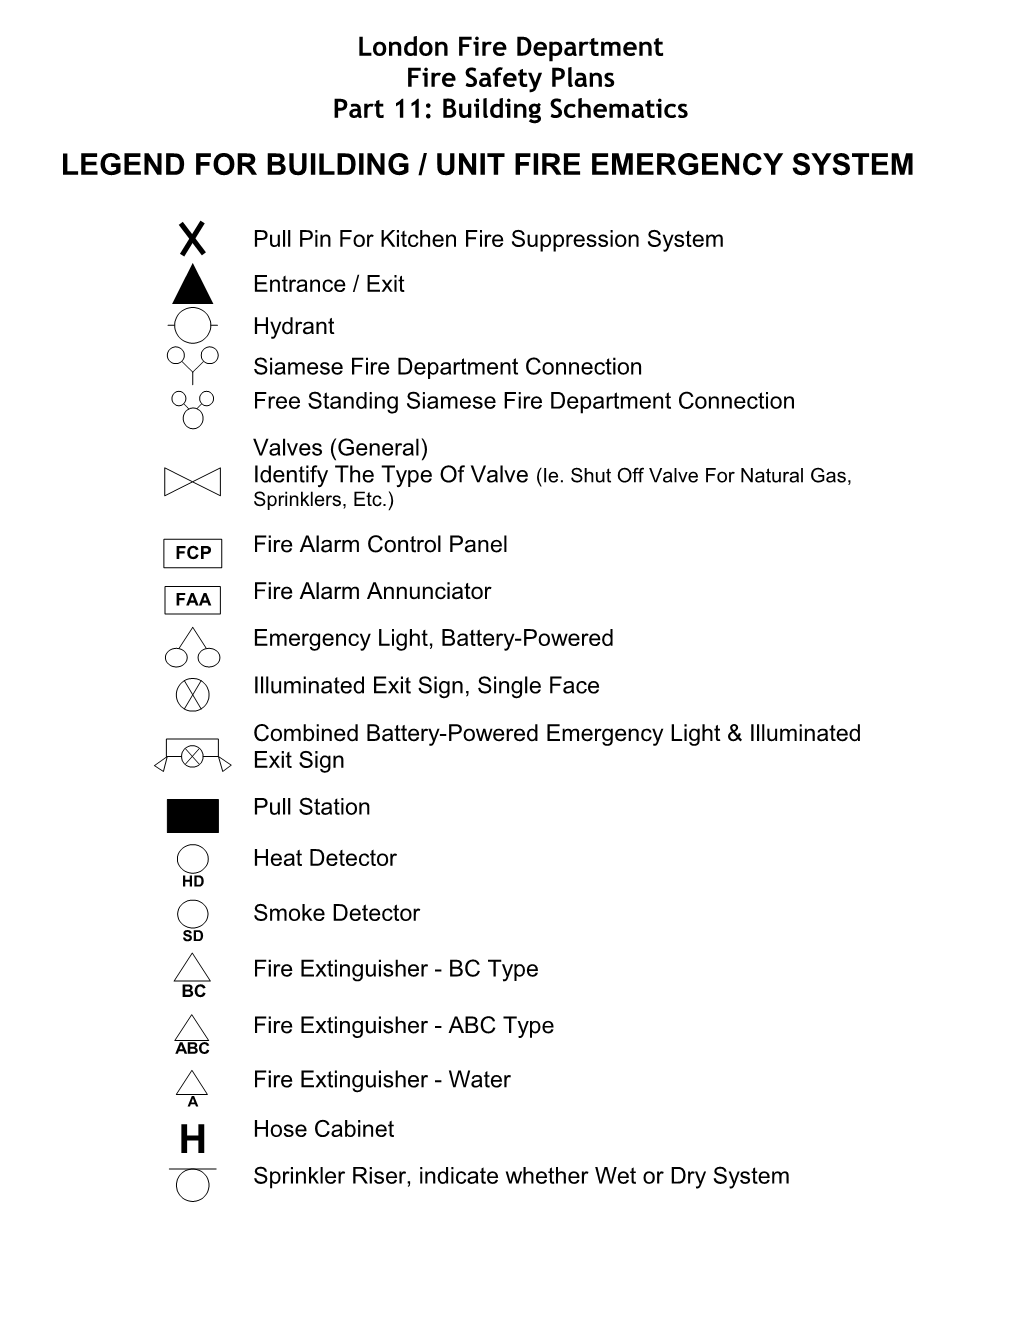 Legend for Building / Unit Fire Emergency System